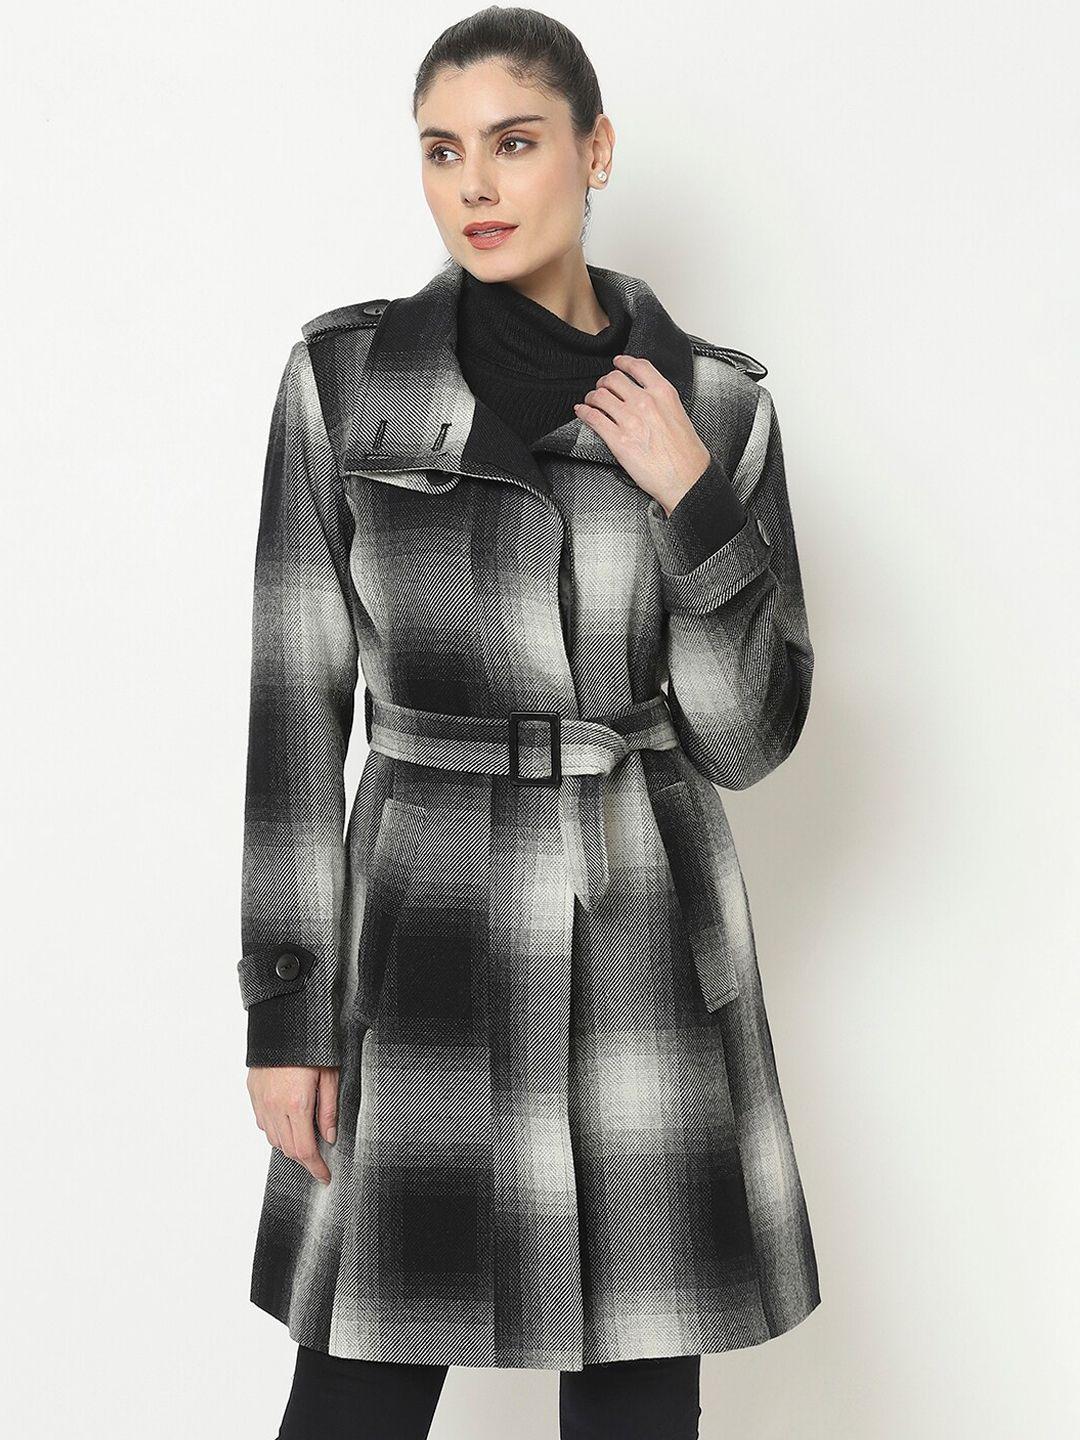 owncraft women black & white checked woolen coat